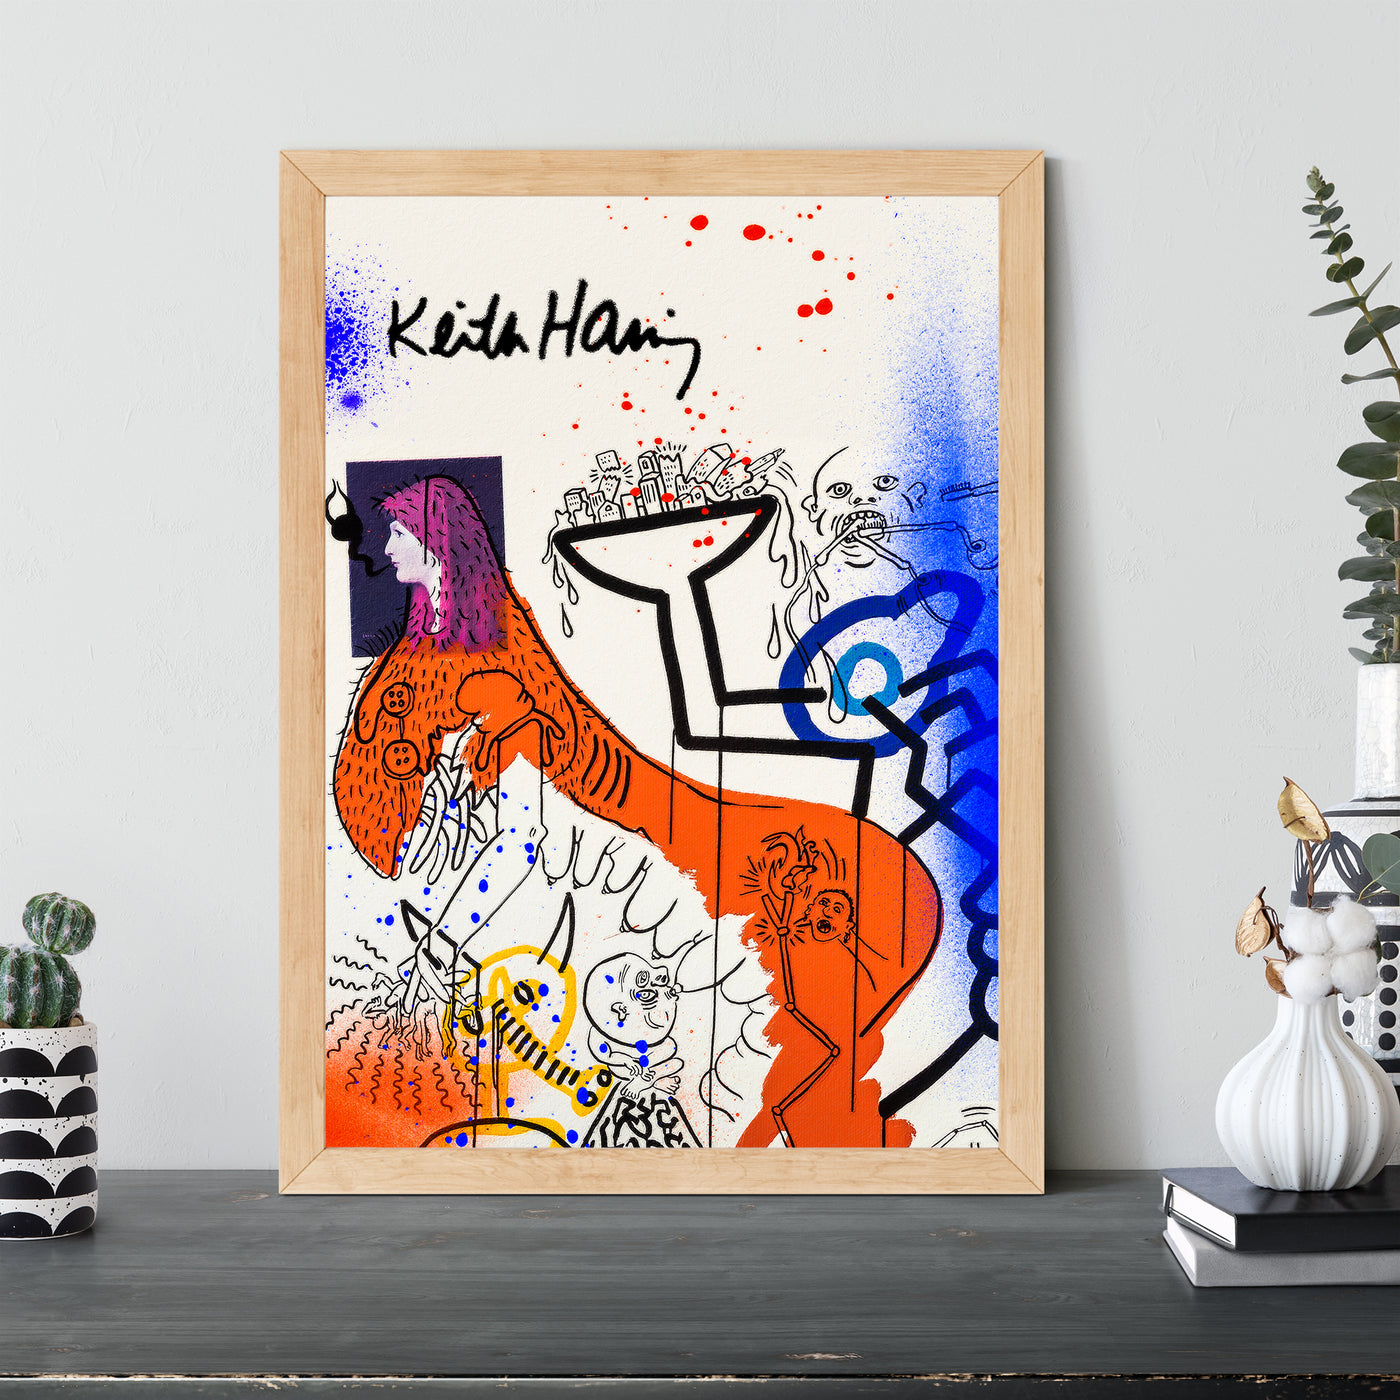 Keith Haring Pop Art #6